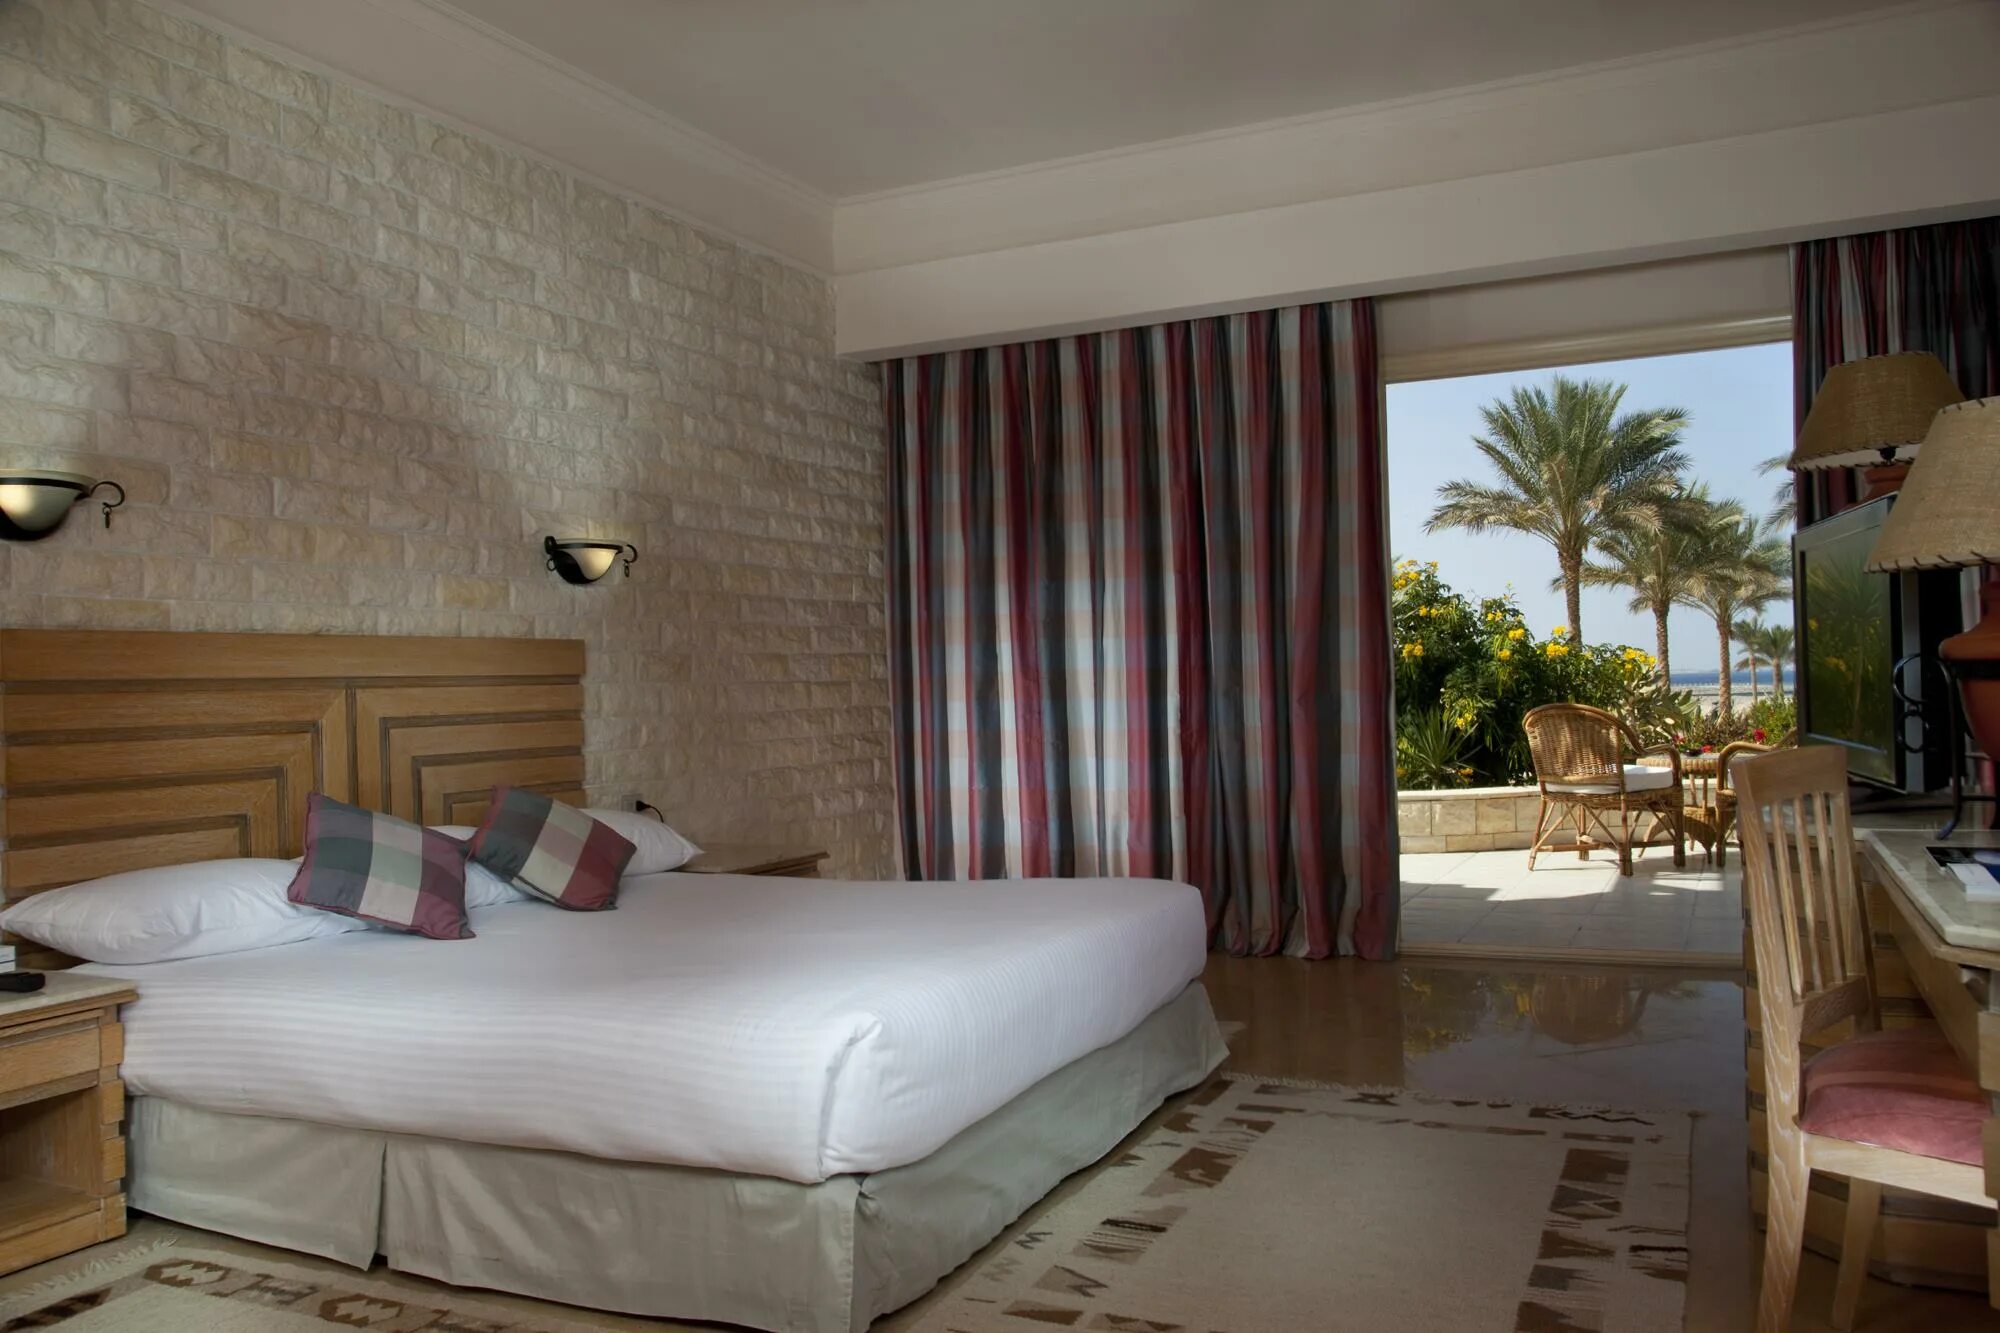 Coral beach хургада. Отель Coral Beach Resort Hurghada. Отель Coral Beach Hotel Hurghada 4*. Отель Корал Бич ротана Резорт Хургада. Ротана Хургада отель Корал Бич.